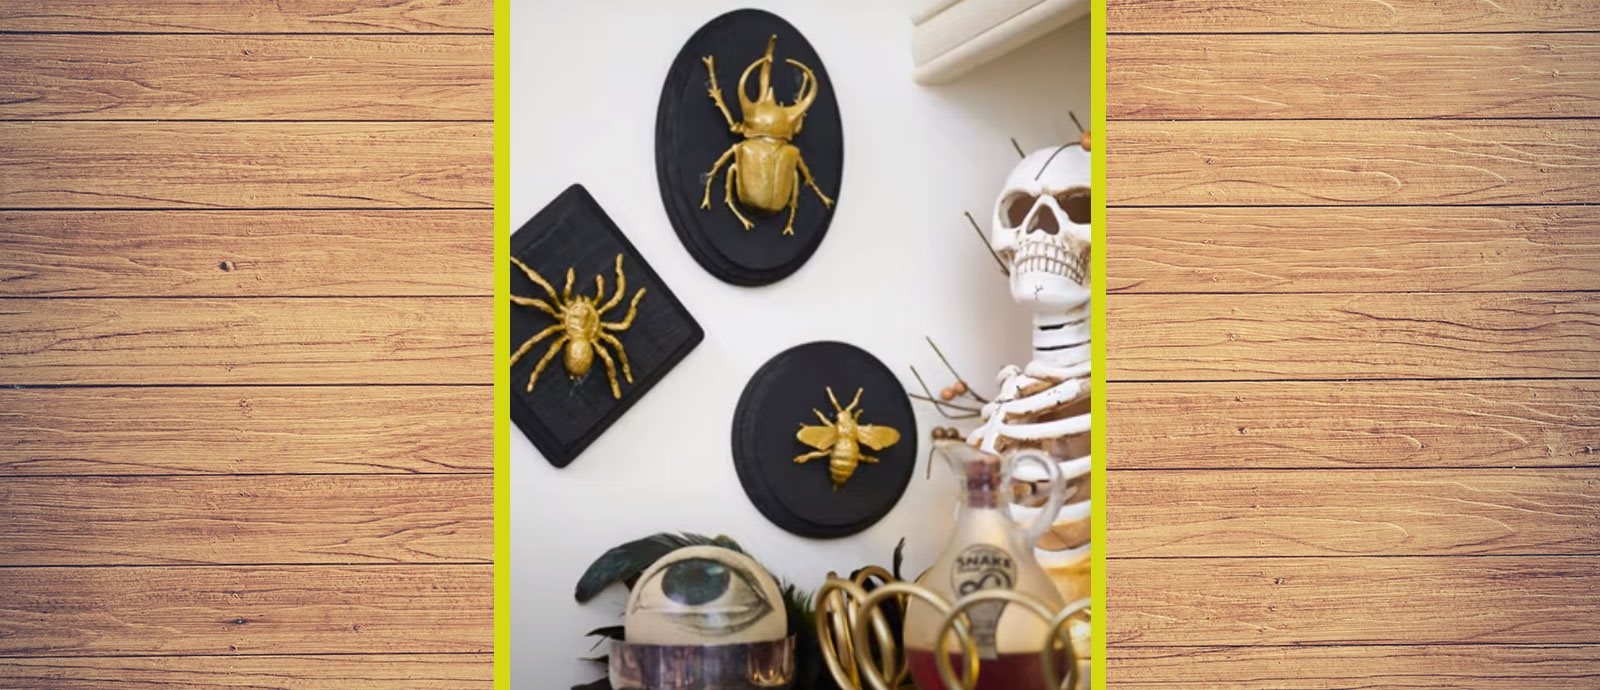 How to build DIY Halloween bug wall decor